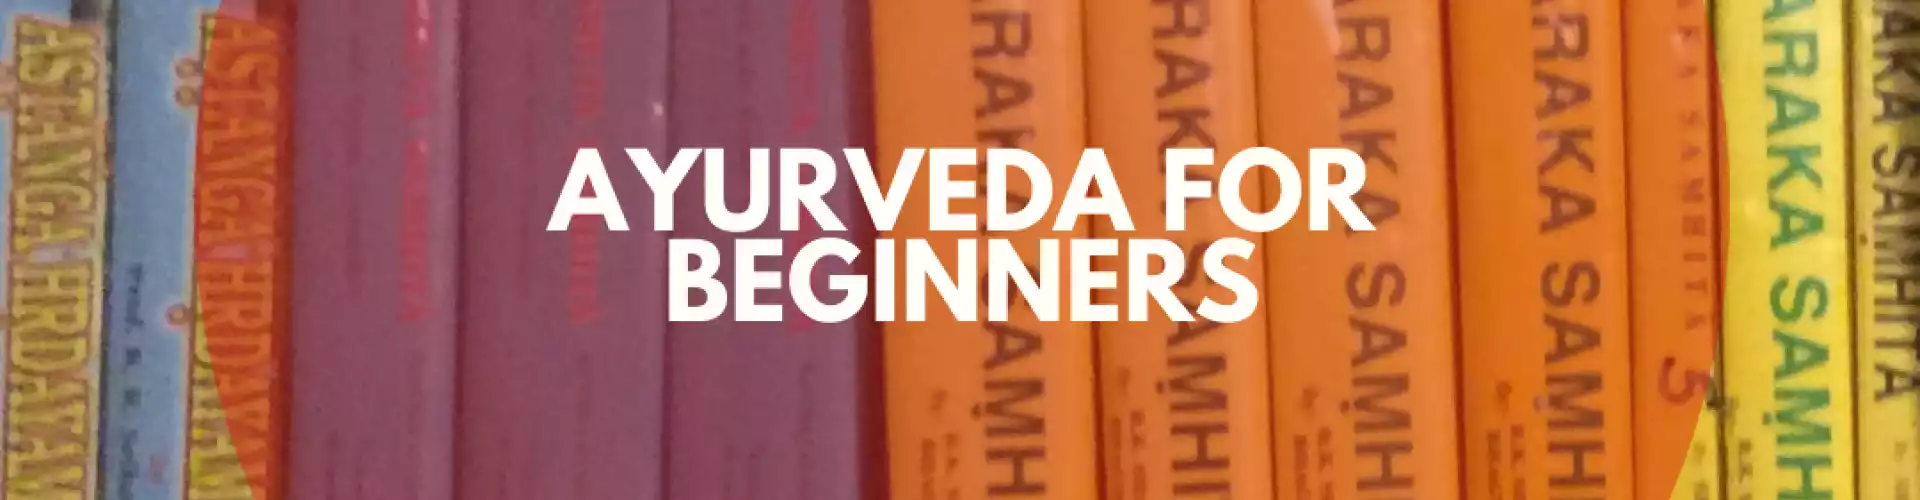 Ayurveda for Beginners 